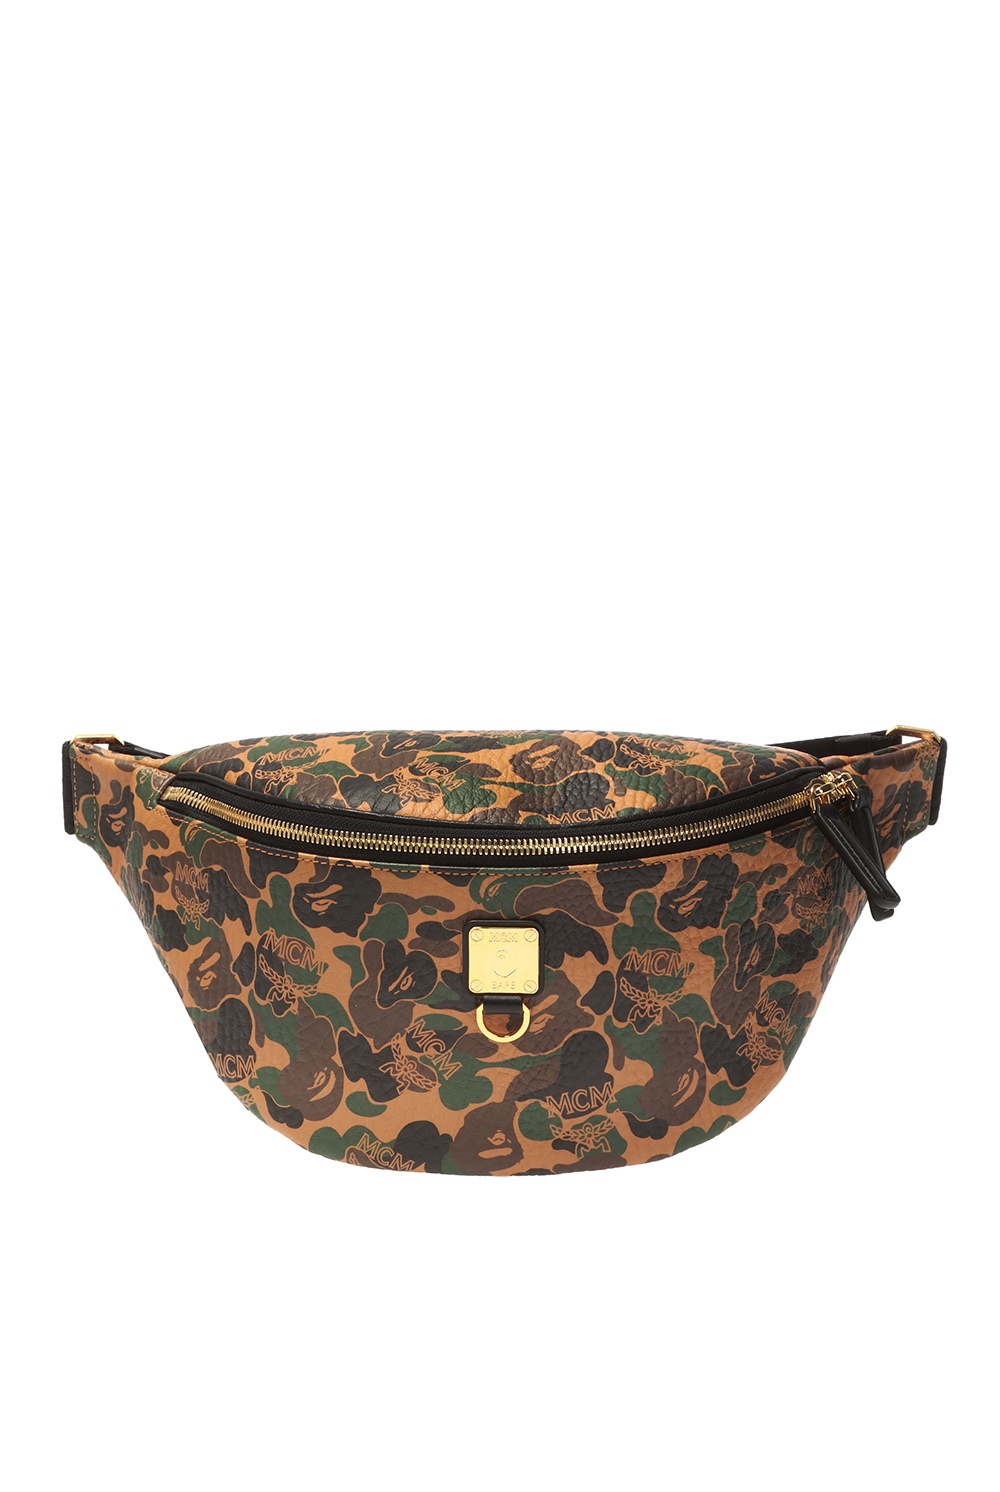 McM Bape belt bag, Men's Fashion, Bags, Belt bags, Clutches and